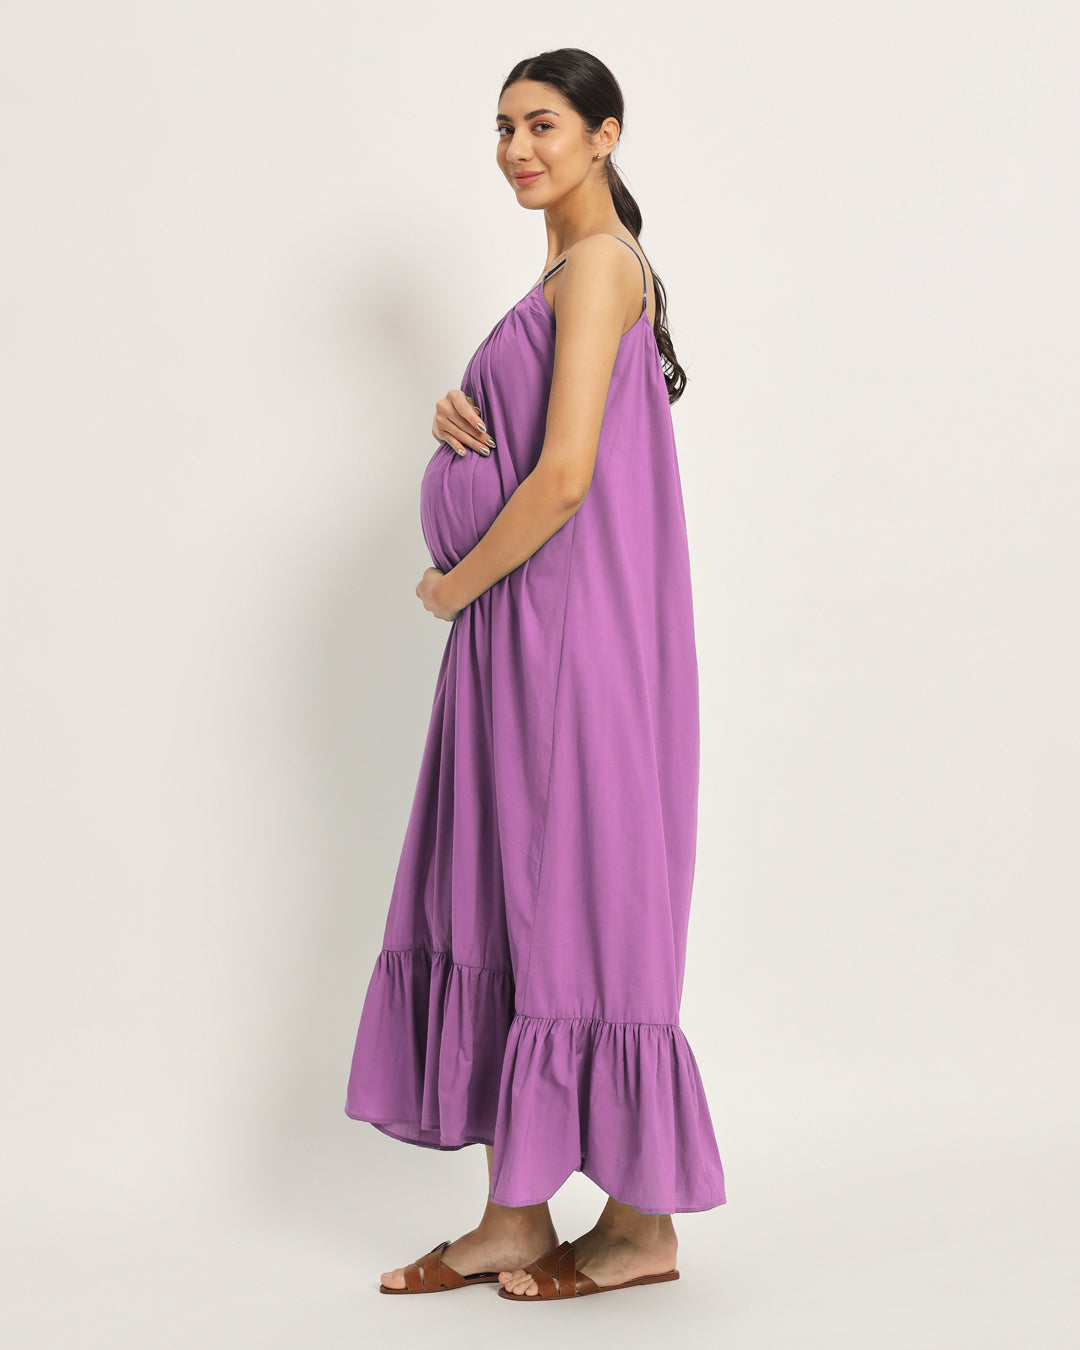 Wisteria Purple Belly Laugh Maternity & Nursing Dress